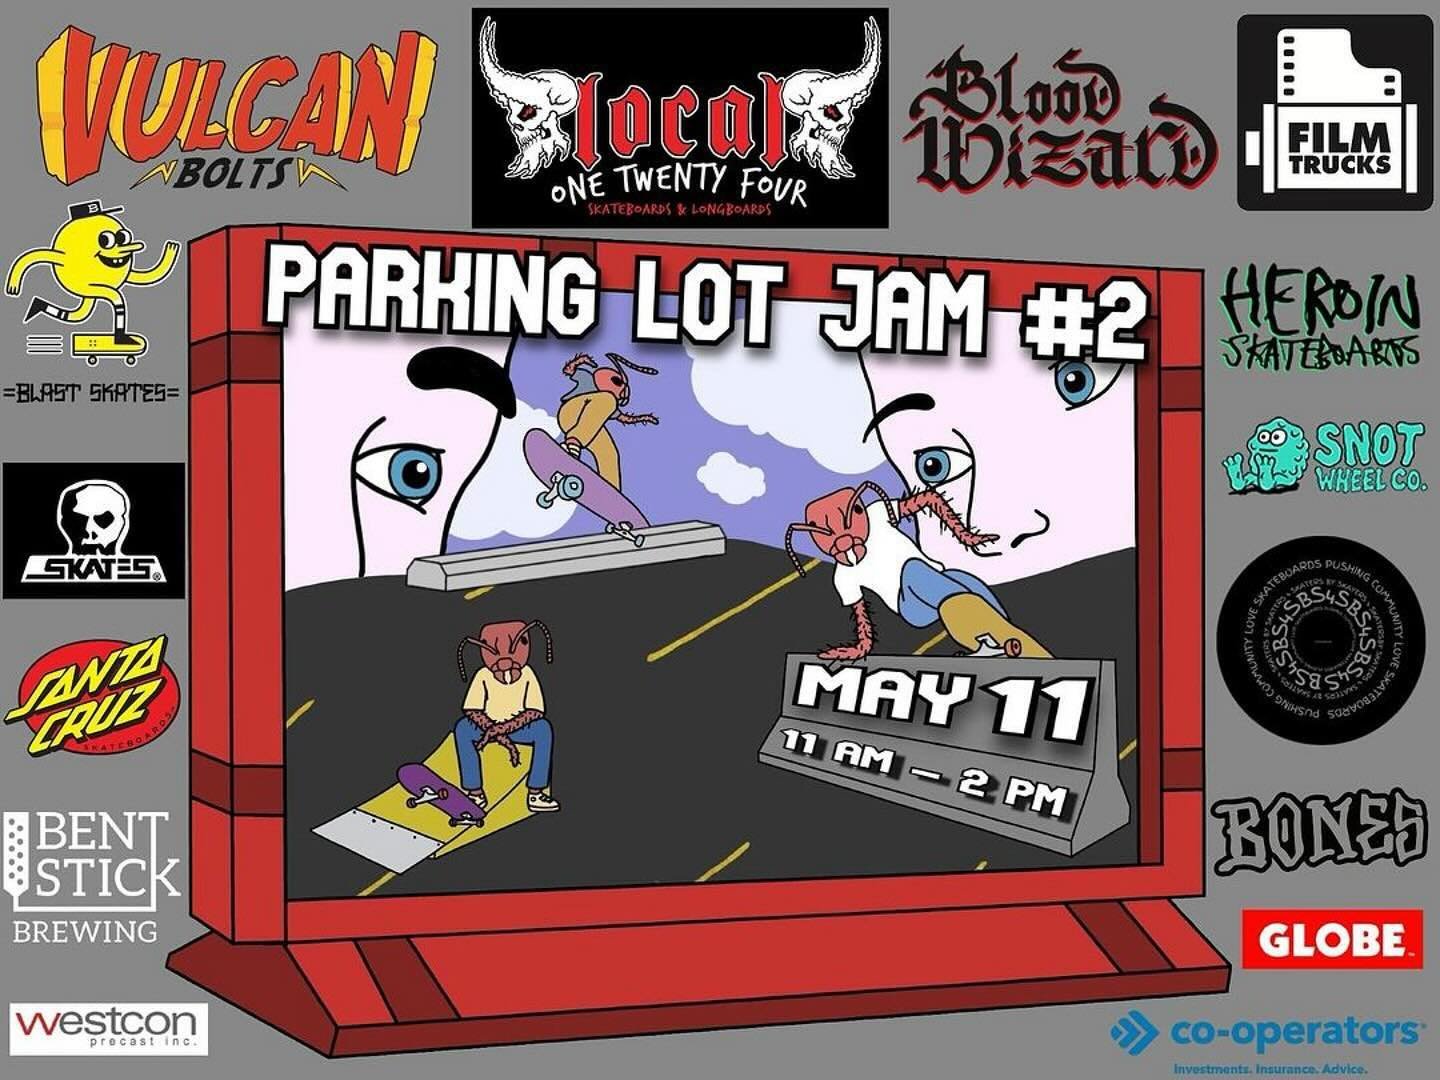 Come skate the Parking lot Jam May 11th @local124skateshop Free to enter. Multiple events from 11 AM til 2 PM. 
#yegskateboarding #yeg #haveabeerandwatchskateboarding #licensedpatio #edmontonfun